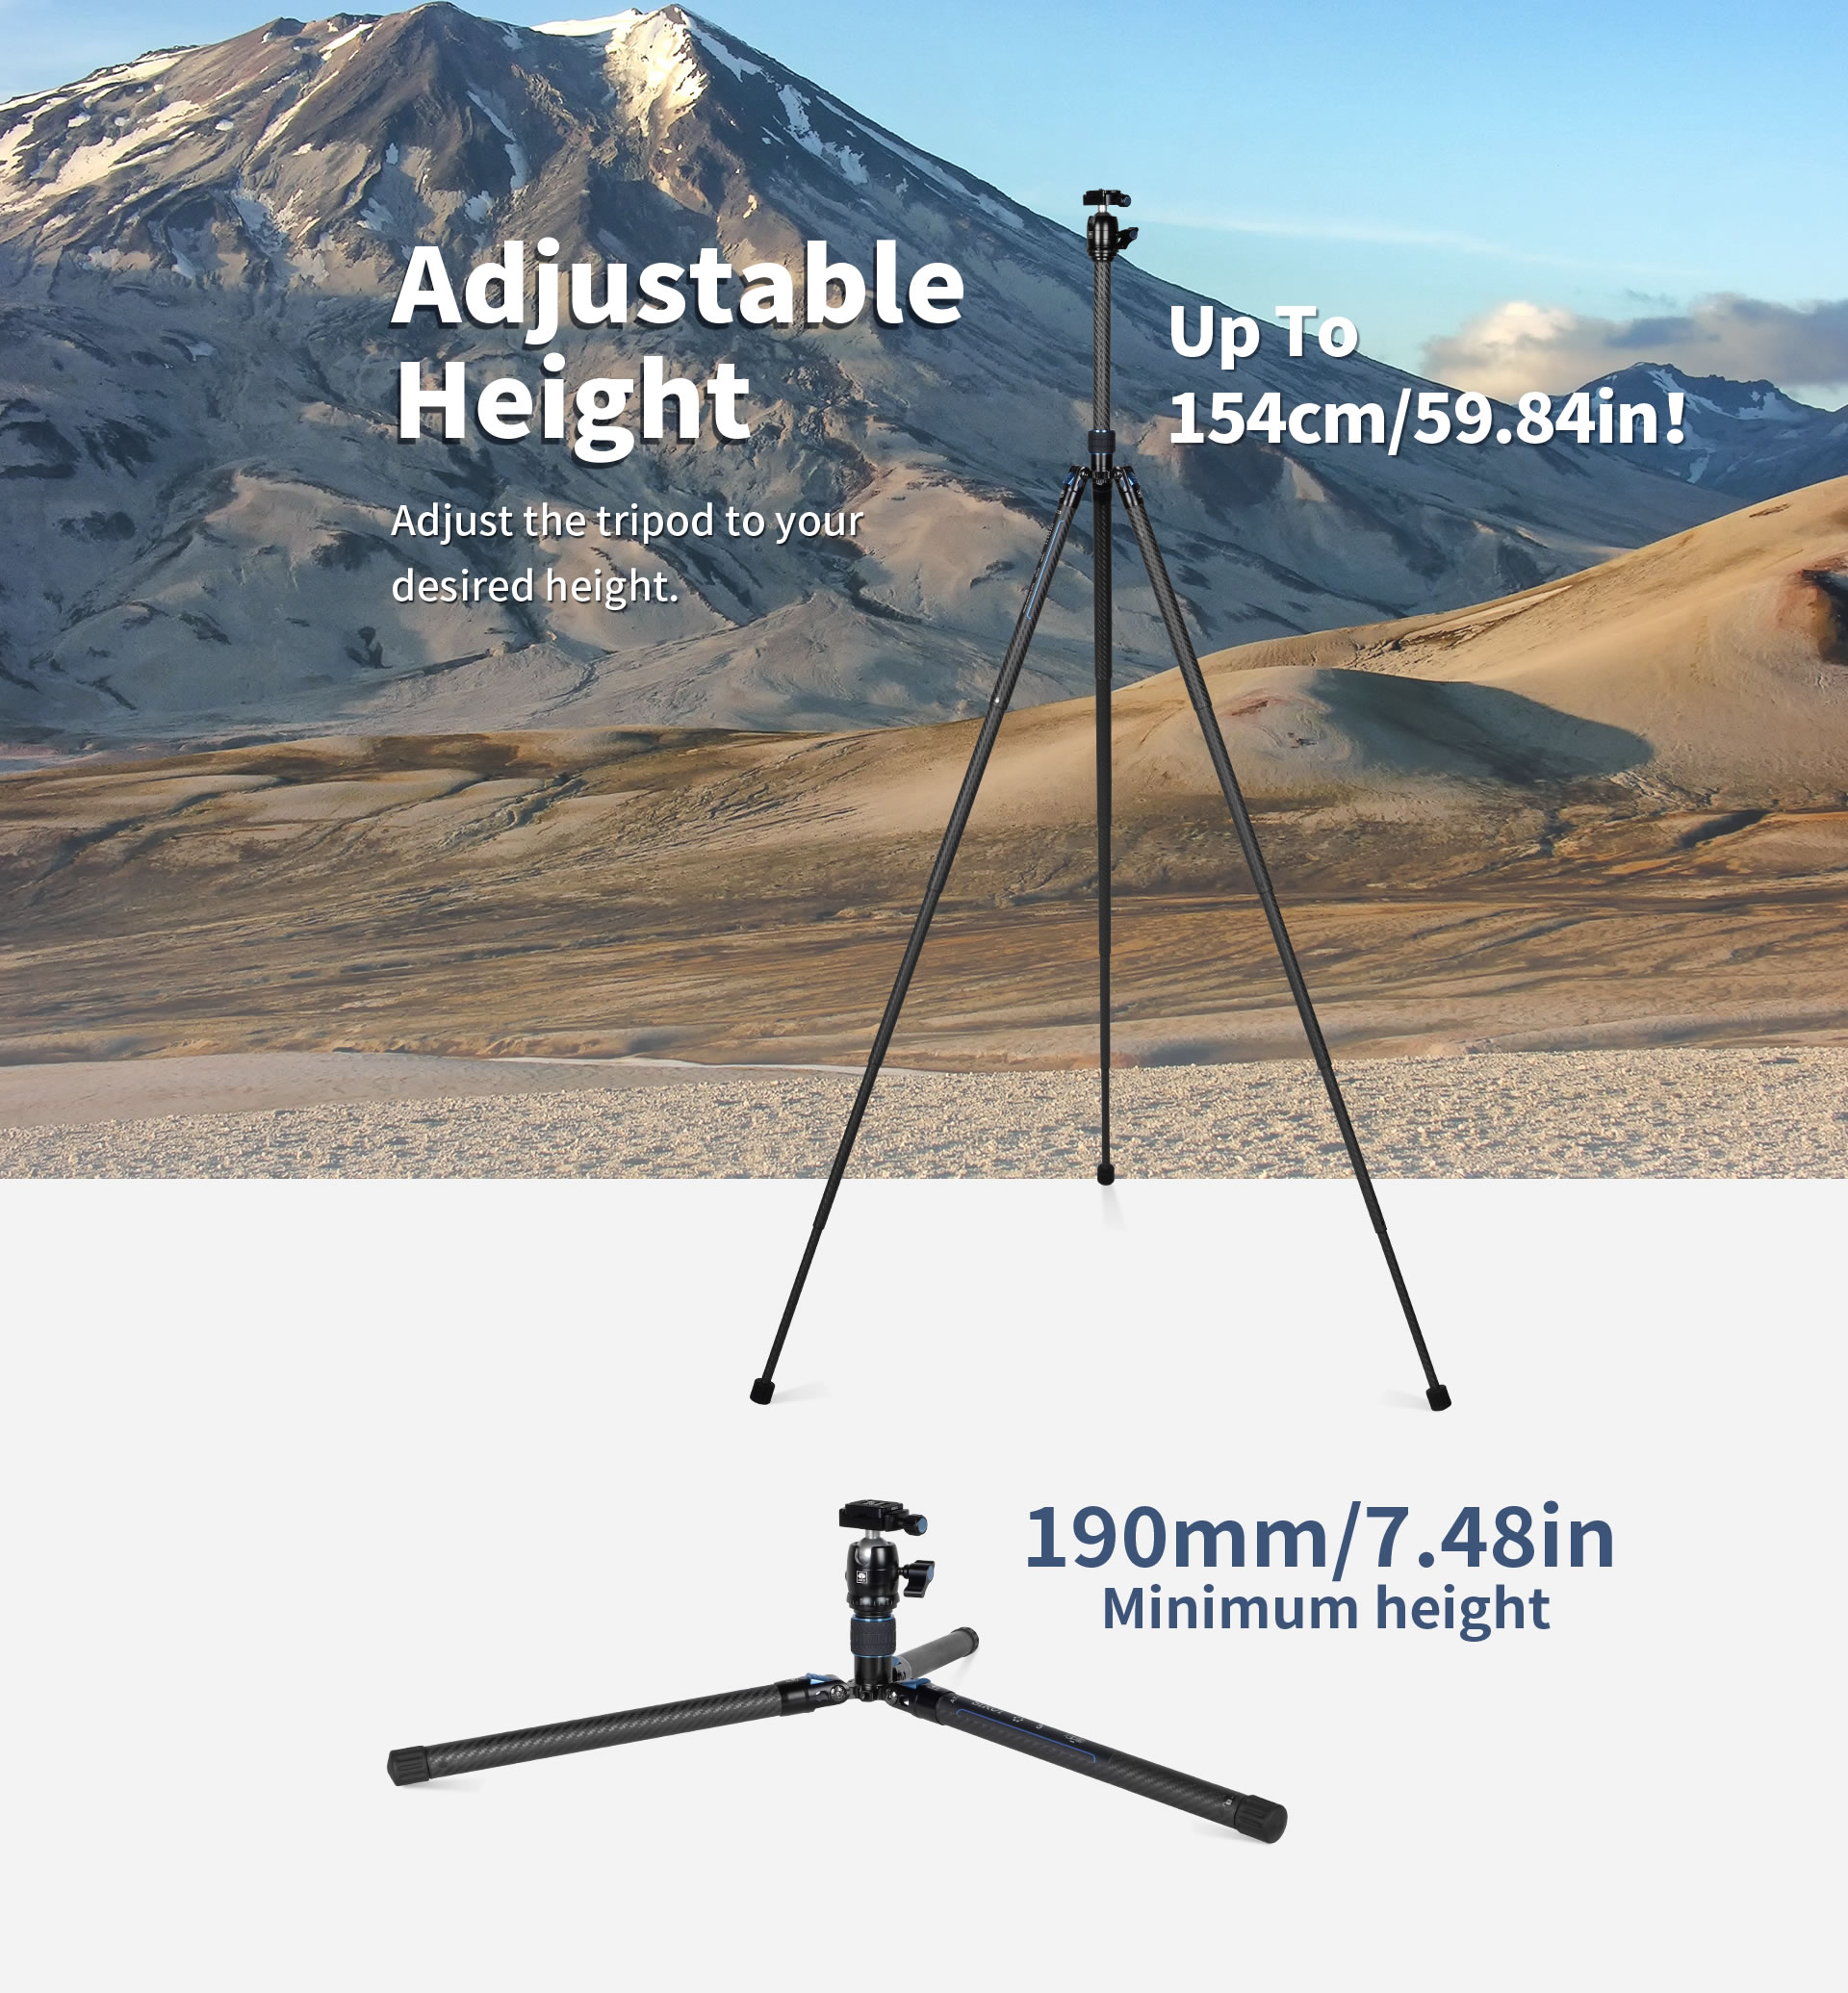 Adjustable Height